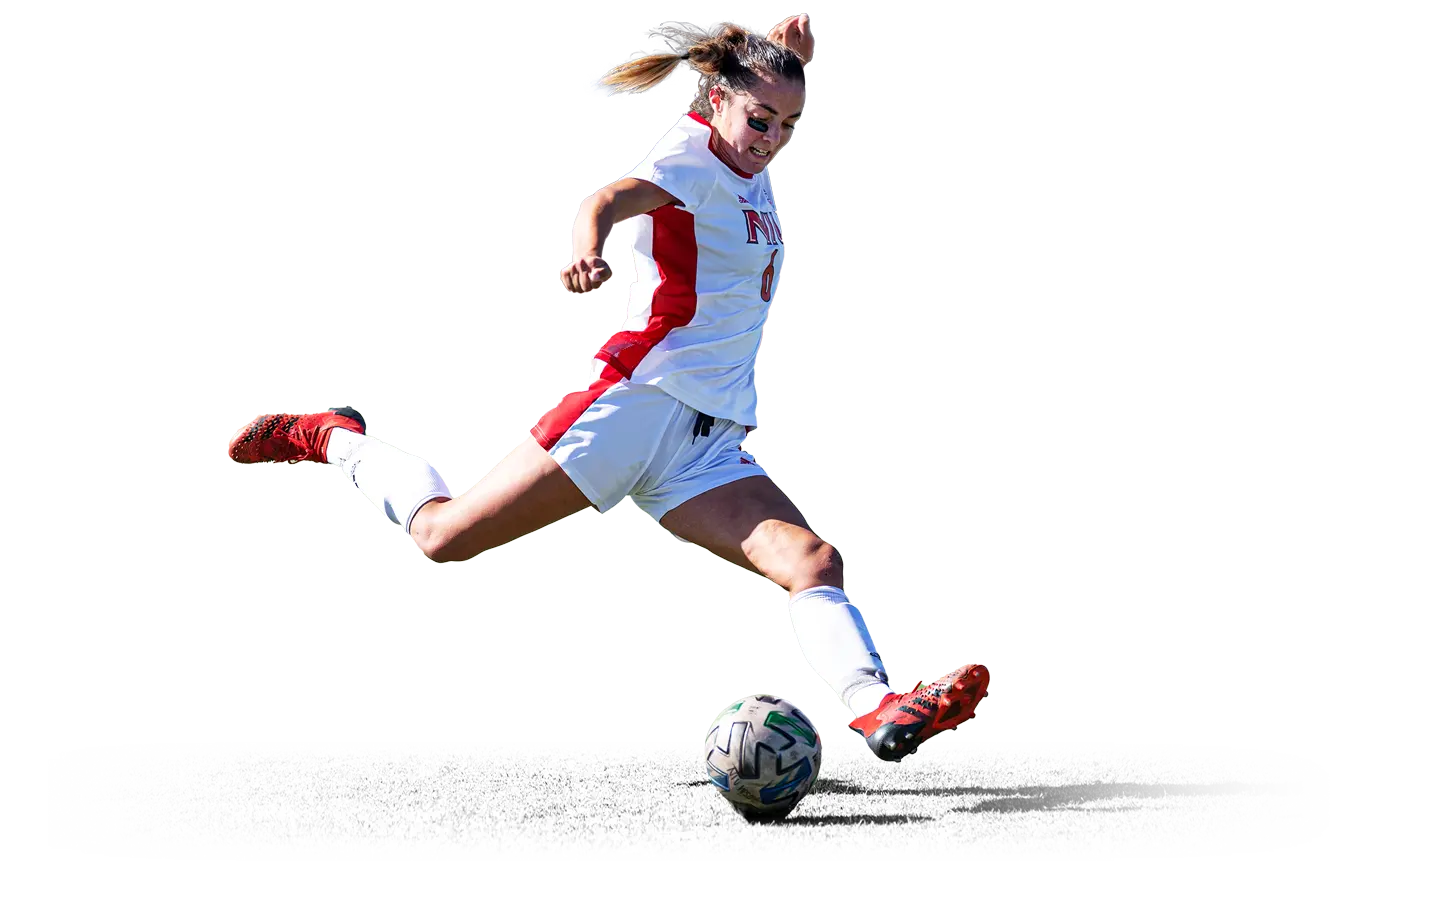 Women's soccer player kicking the ball